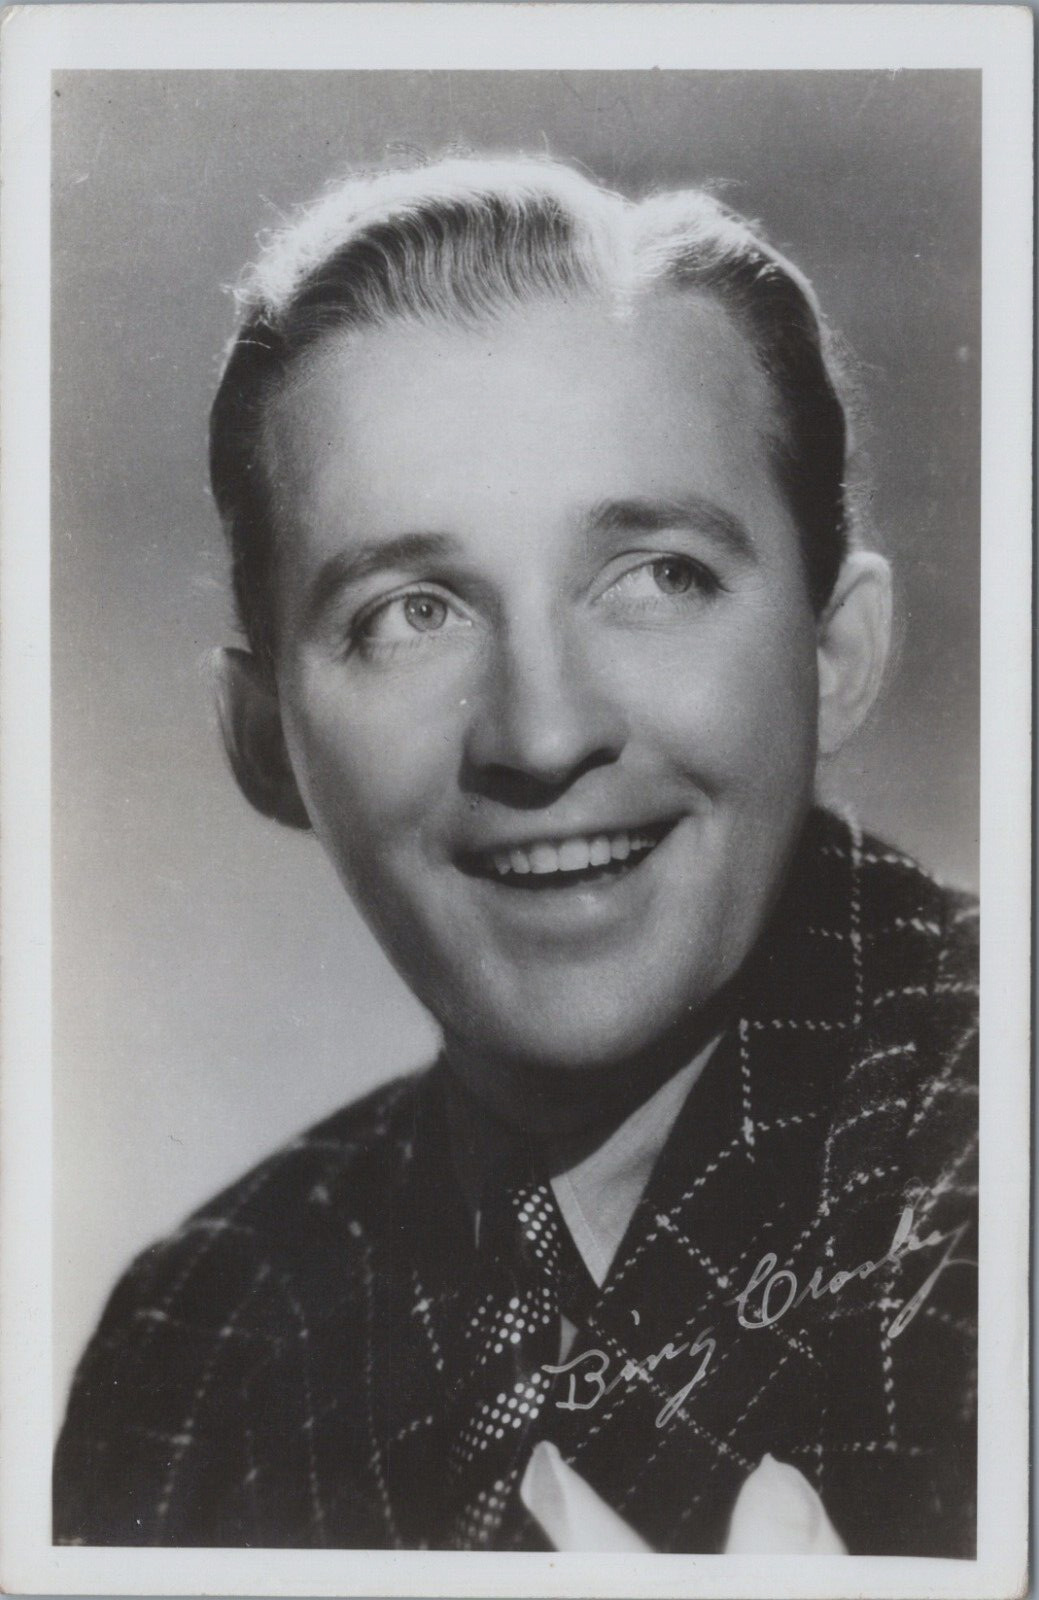 RPPC Bing Crosby Portrait Photo